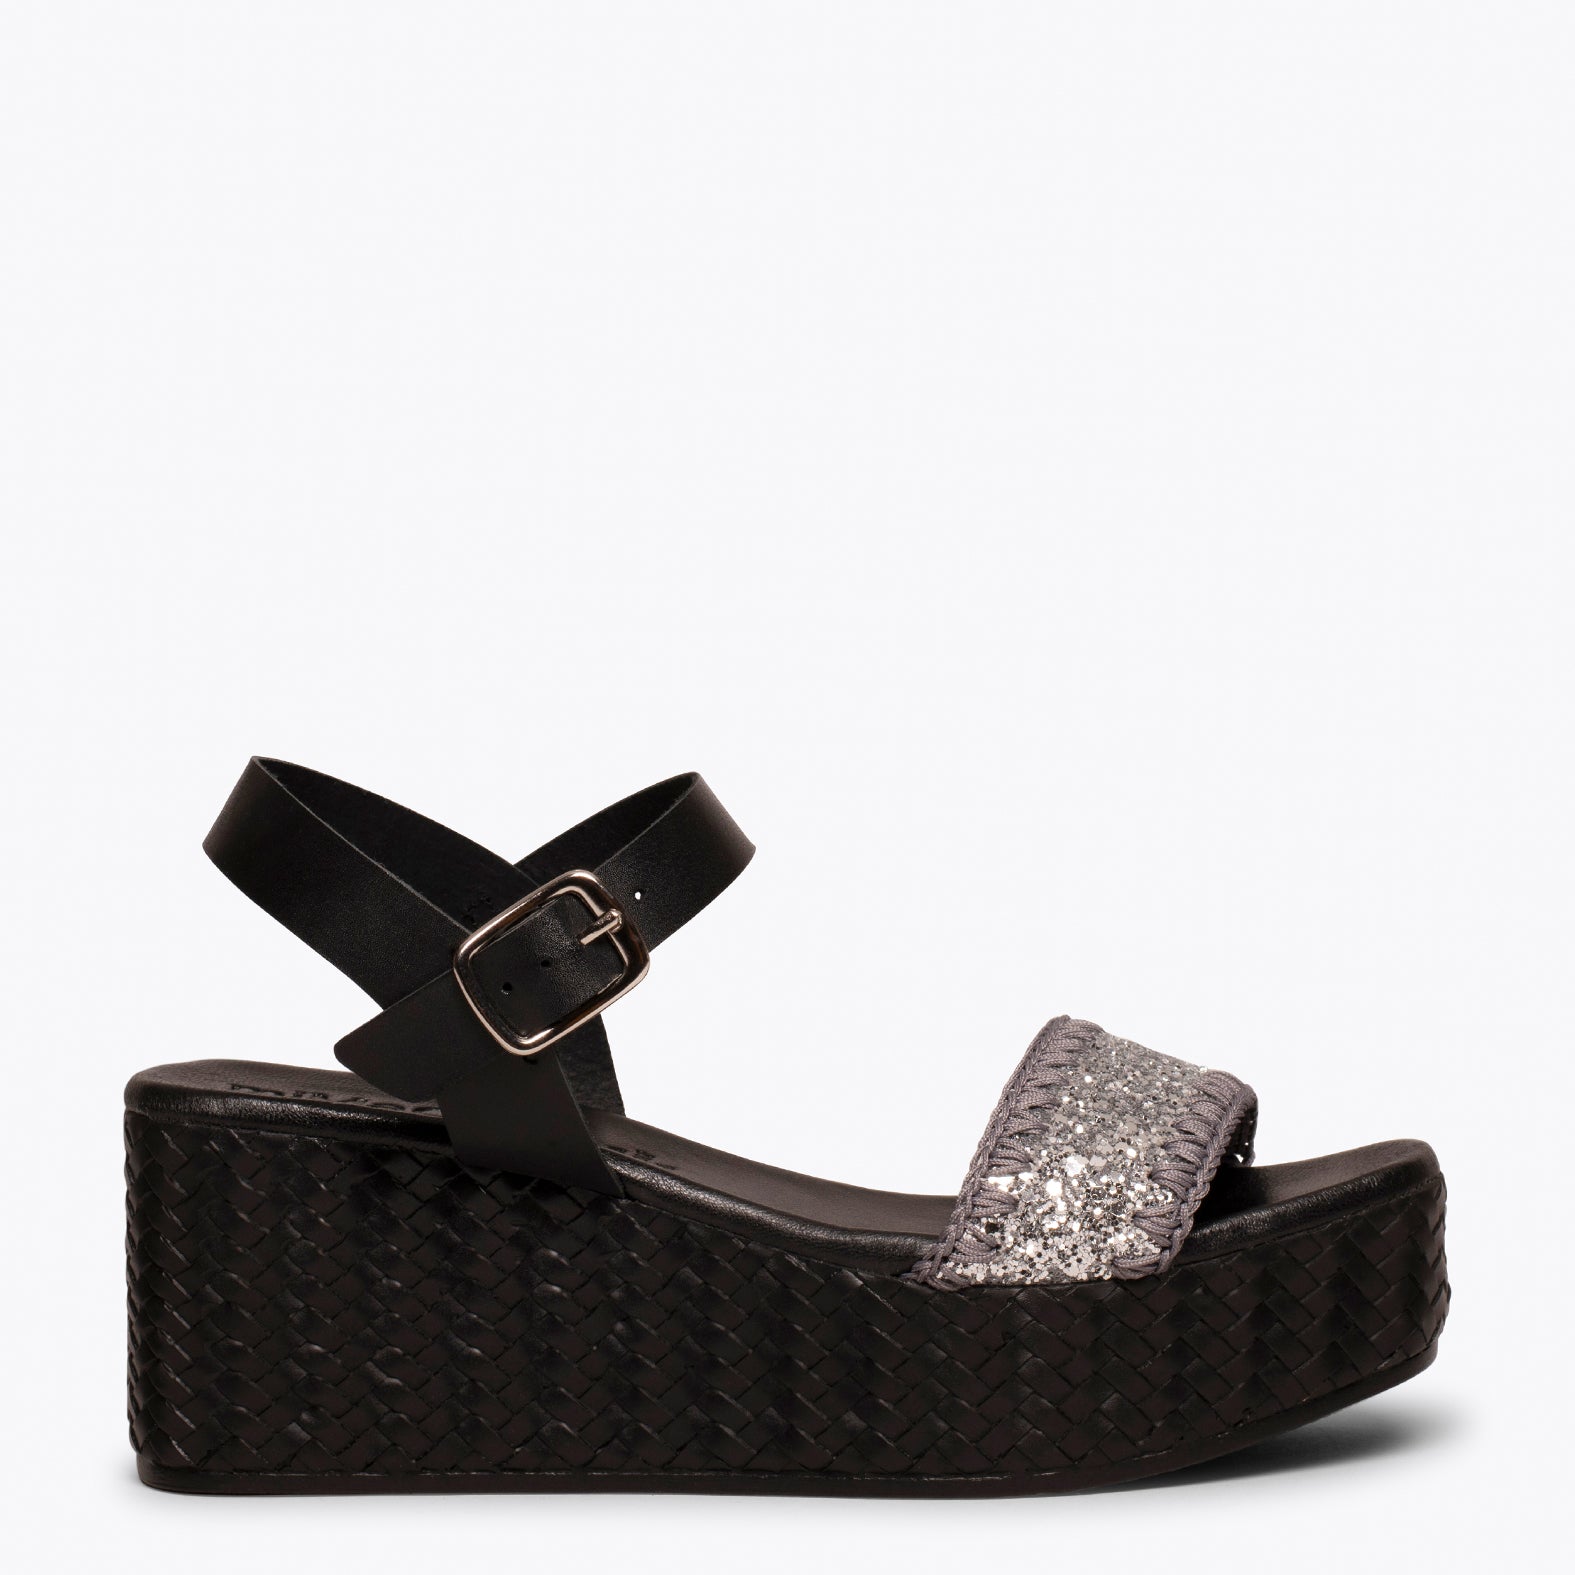 SHINE – SILVER platform sandal with glitter strap